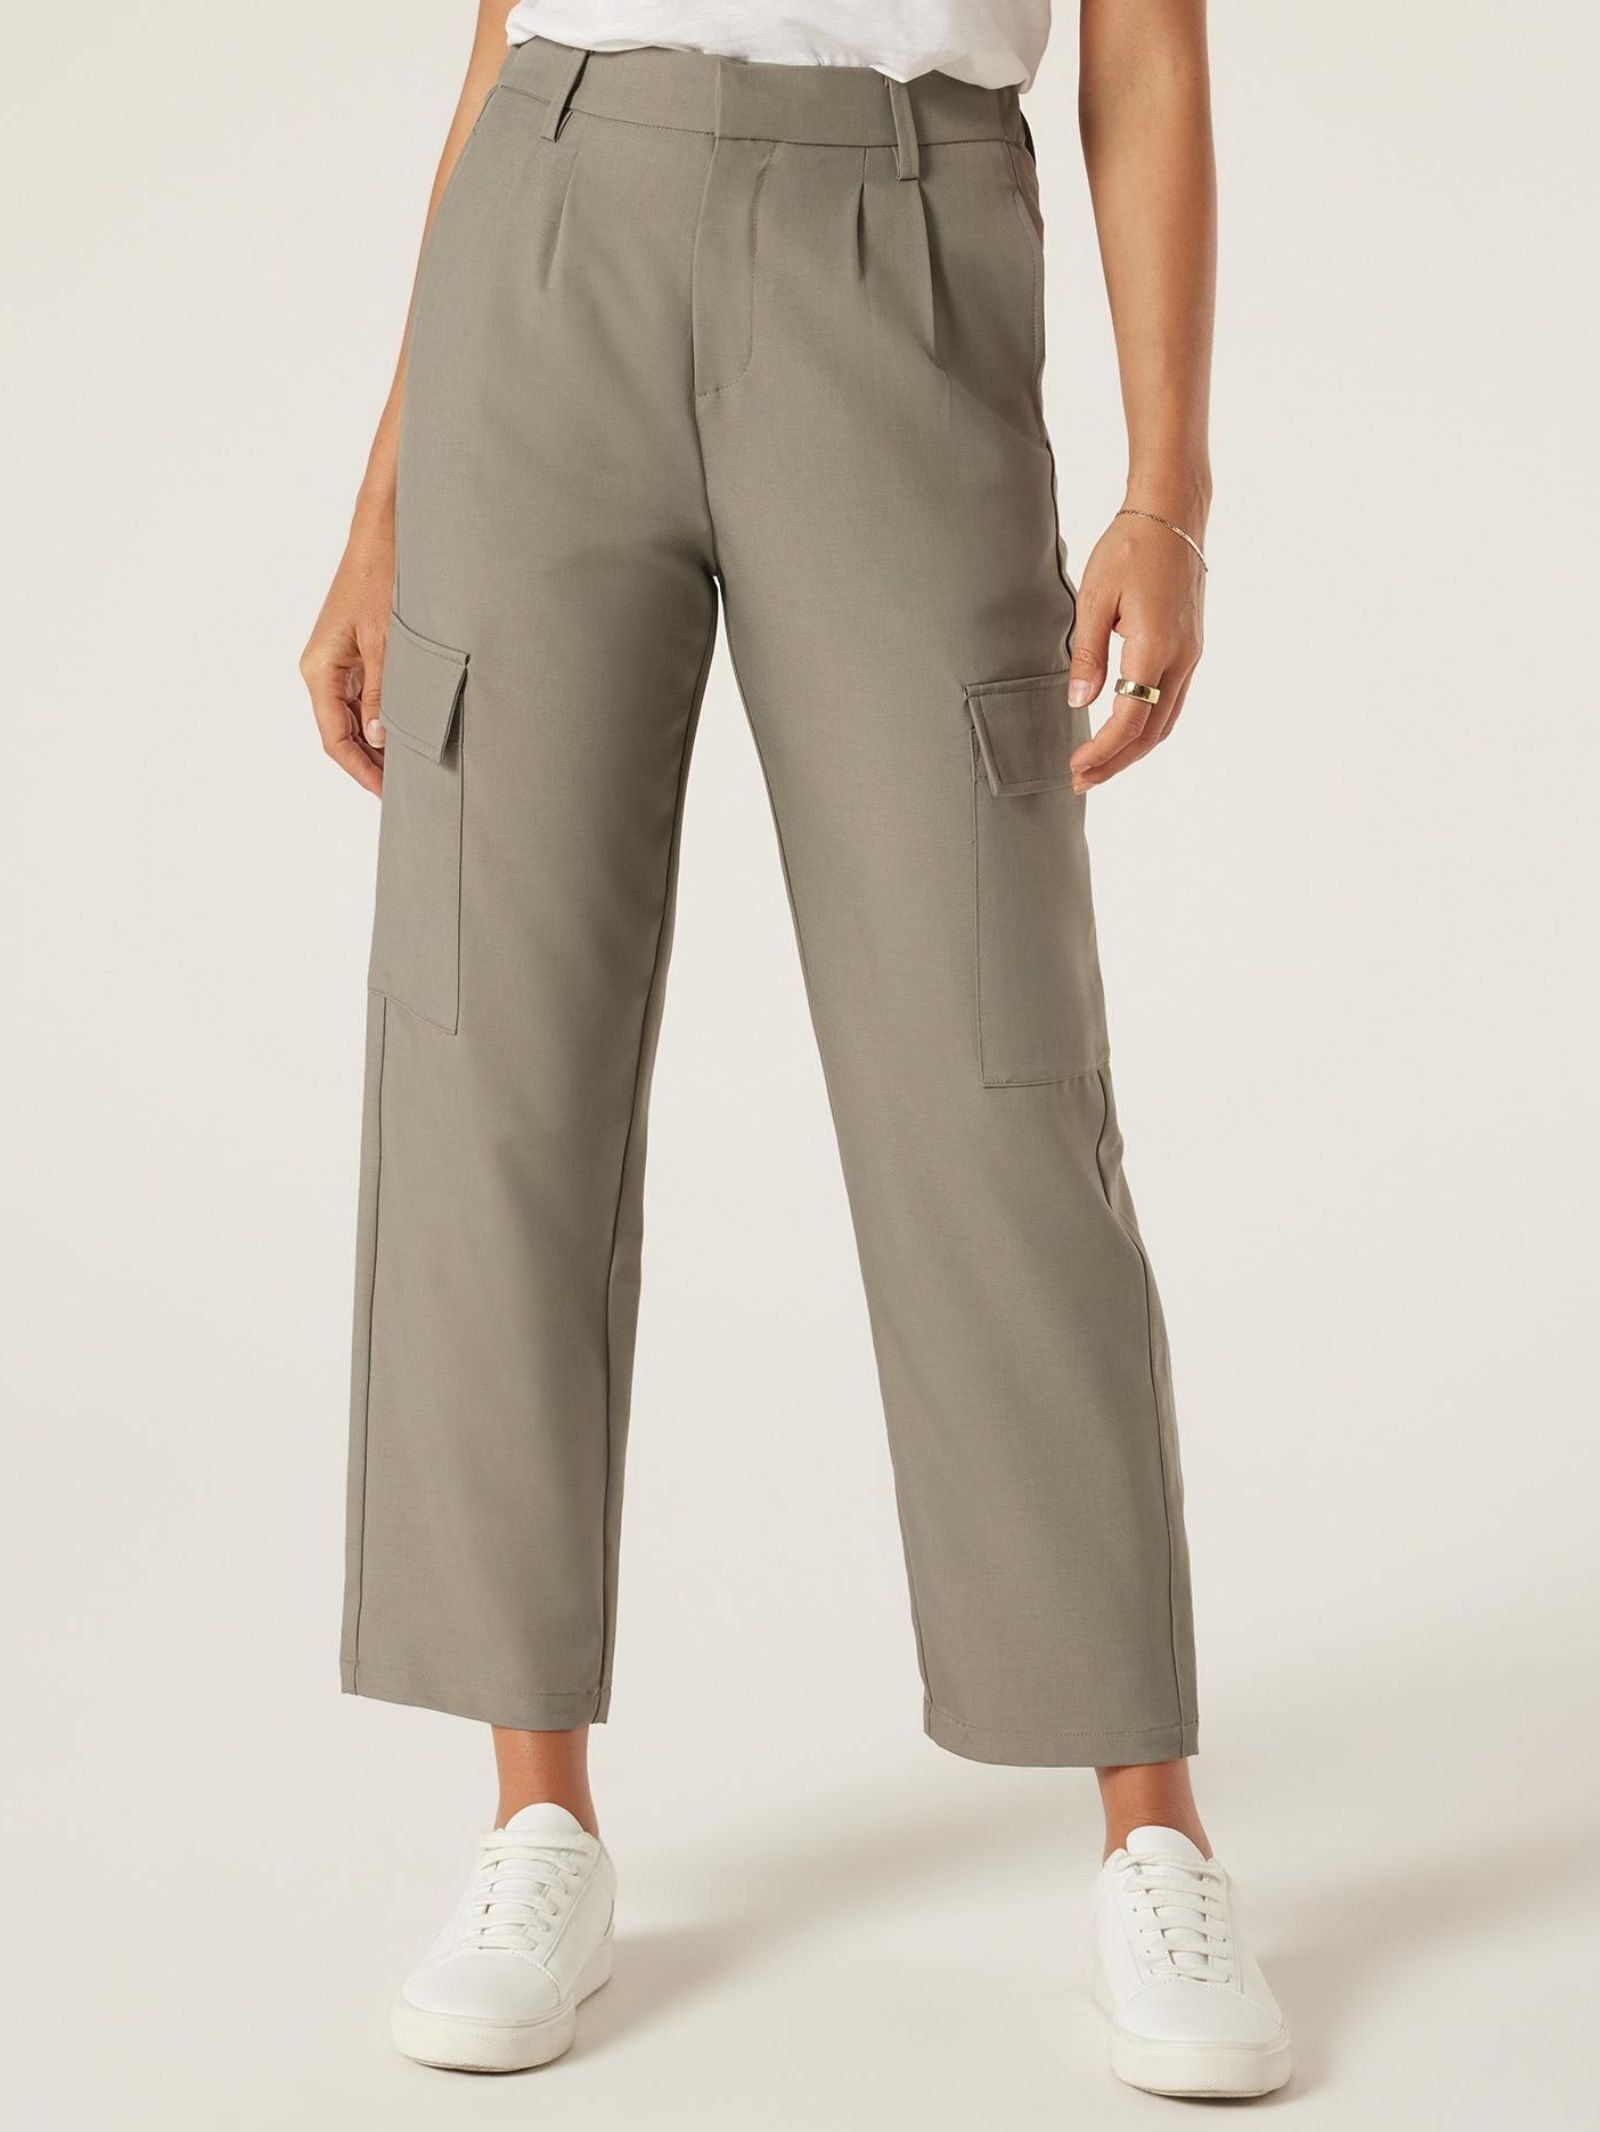 Womens Joggers Capri 3/4 Crop Trousers Casual Jogging Bottoms Cargo Pants ❃  | eBay